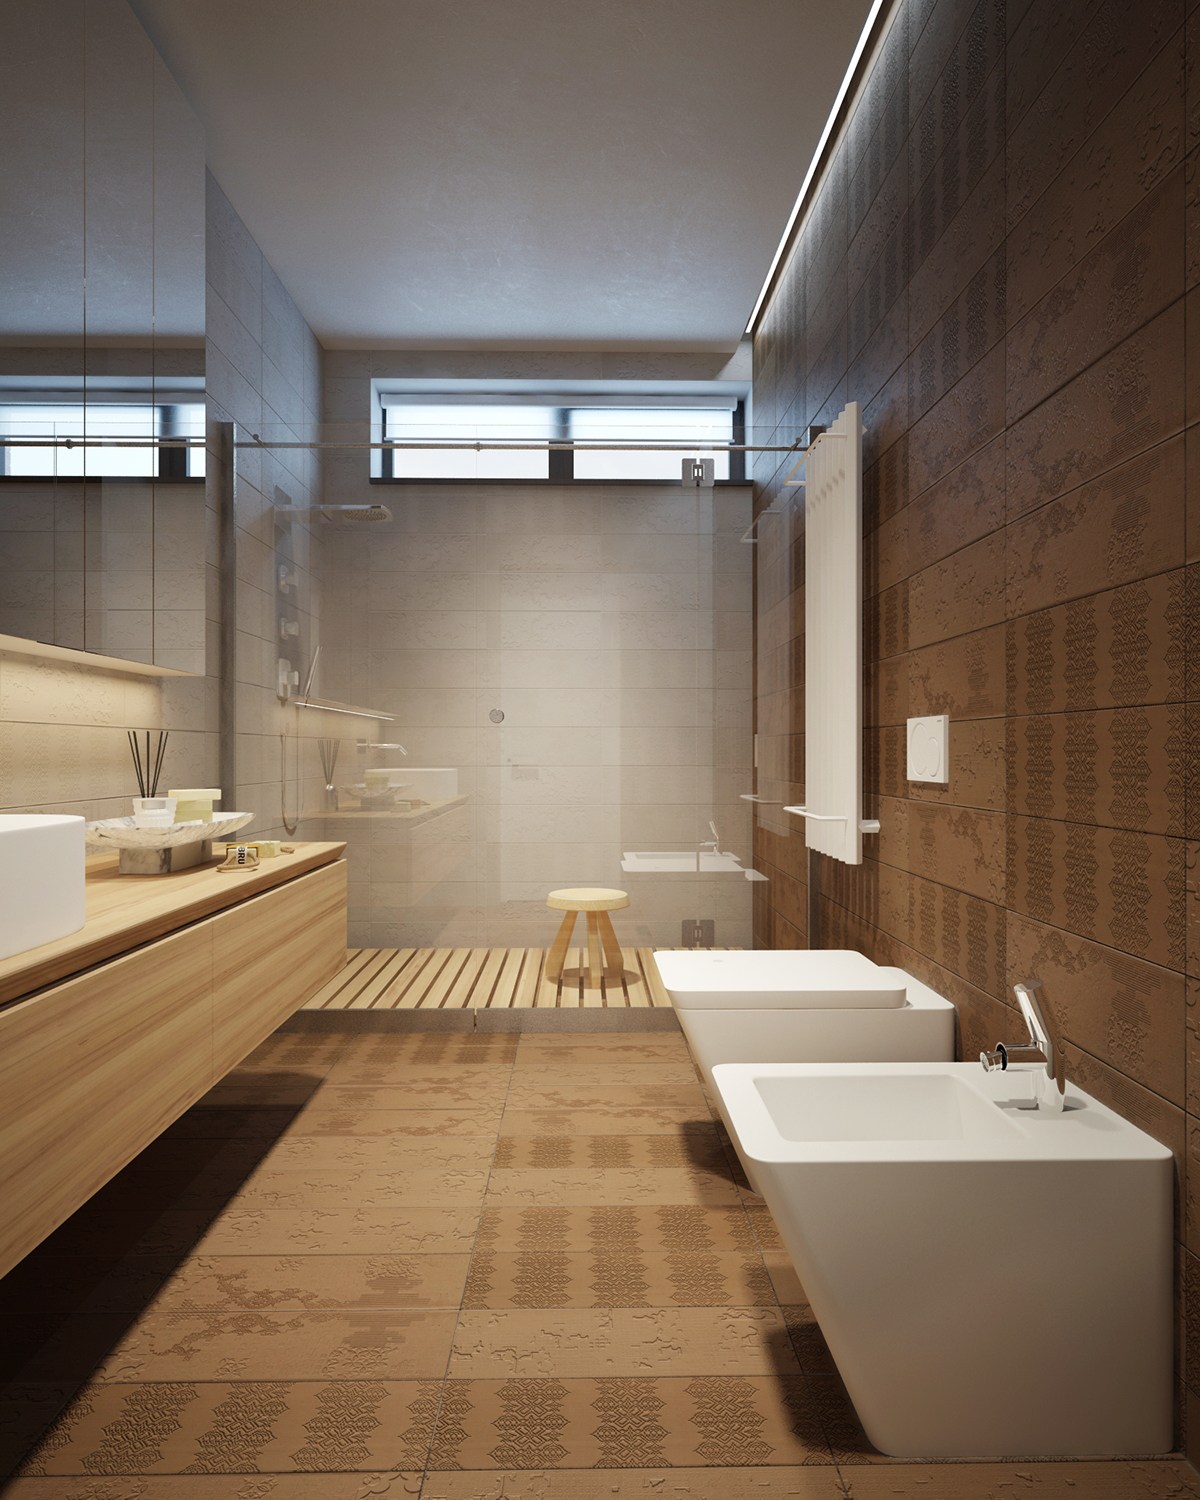 Bathroom design made of wood "width =" 1200 "height =" 1500 "srcset =" https://mileray.com/wp-content/uploads/2020/05/1588515690_832_Modern-Bathroom-Design-Ideas-Using-a-Wooden-Accent-As-The.jpg 1200w, https: // myfashionos. de / wp-content / uploads / 2016/10 / Sequoia-Design-Studio-240x300.jpg 240w, https://mileray.com/wp-content/uploads/2016/10/Sequoia-Design-Studio-768x960.jpg 768w, https://mileray.com/wp-content/uploads/2016/10/Sequoia-Design-Studio-819x1024.jpg 819w, https://mileray.com/wp-content/uploads/2016/10/Sequoia -Design-Studio-696x870.jpg 696w, https://mileray.com/wp-content/uploads/2016/10/Sequoia-Design-Studio-1068x1335.jpg 1068w, https://mileray.com/wp-content /uploads/2016/10/Sequoia-Design-Studio-336x420.jpg 336w "sizes =" (maximum width: 1200px) 100vw, 1200px